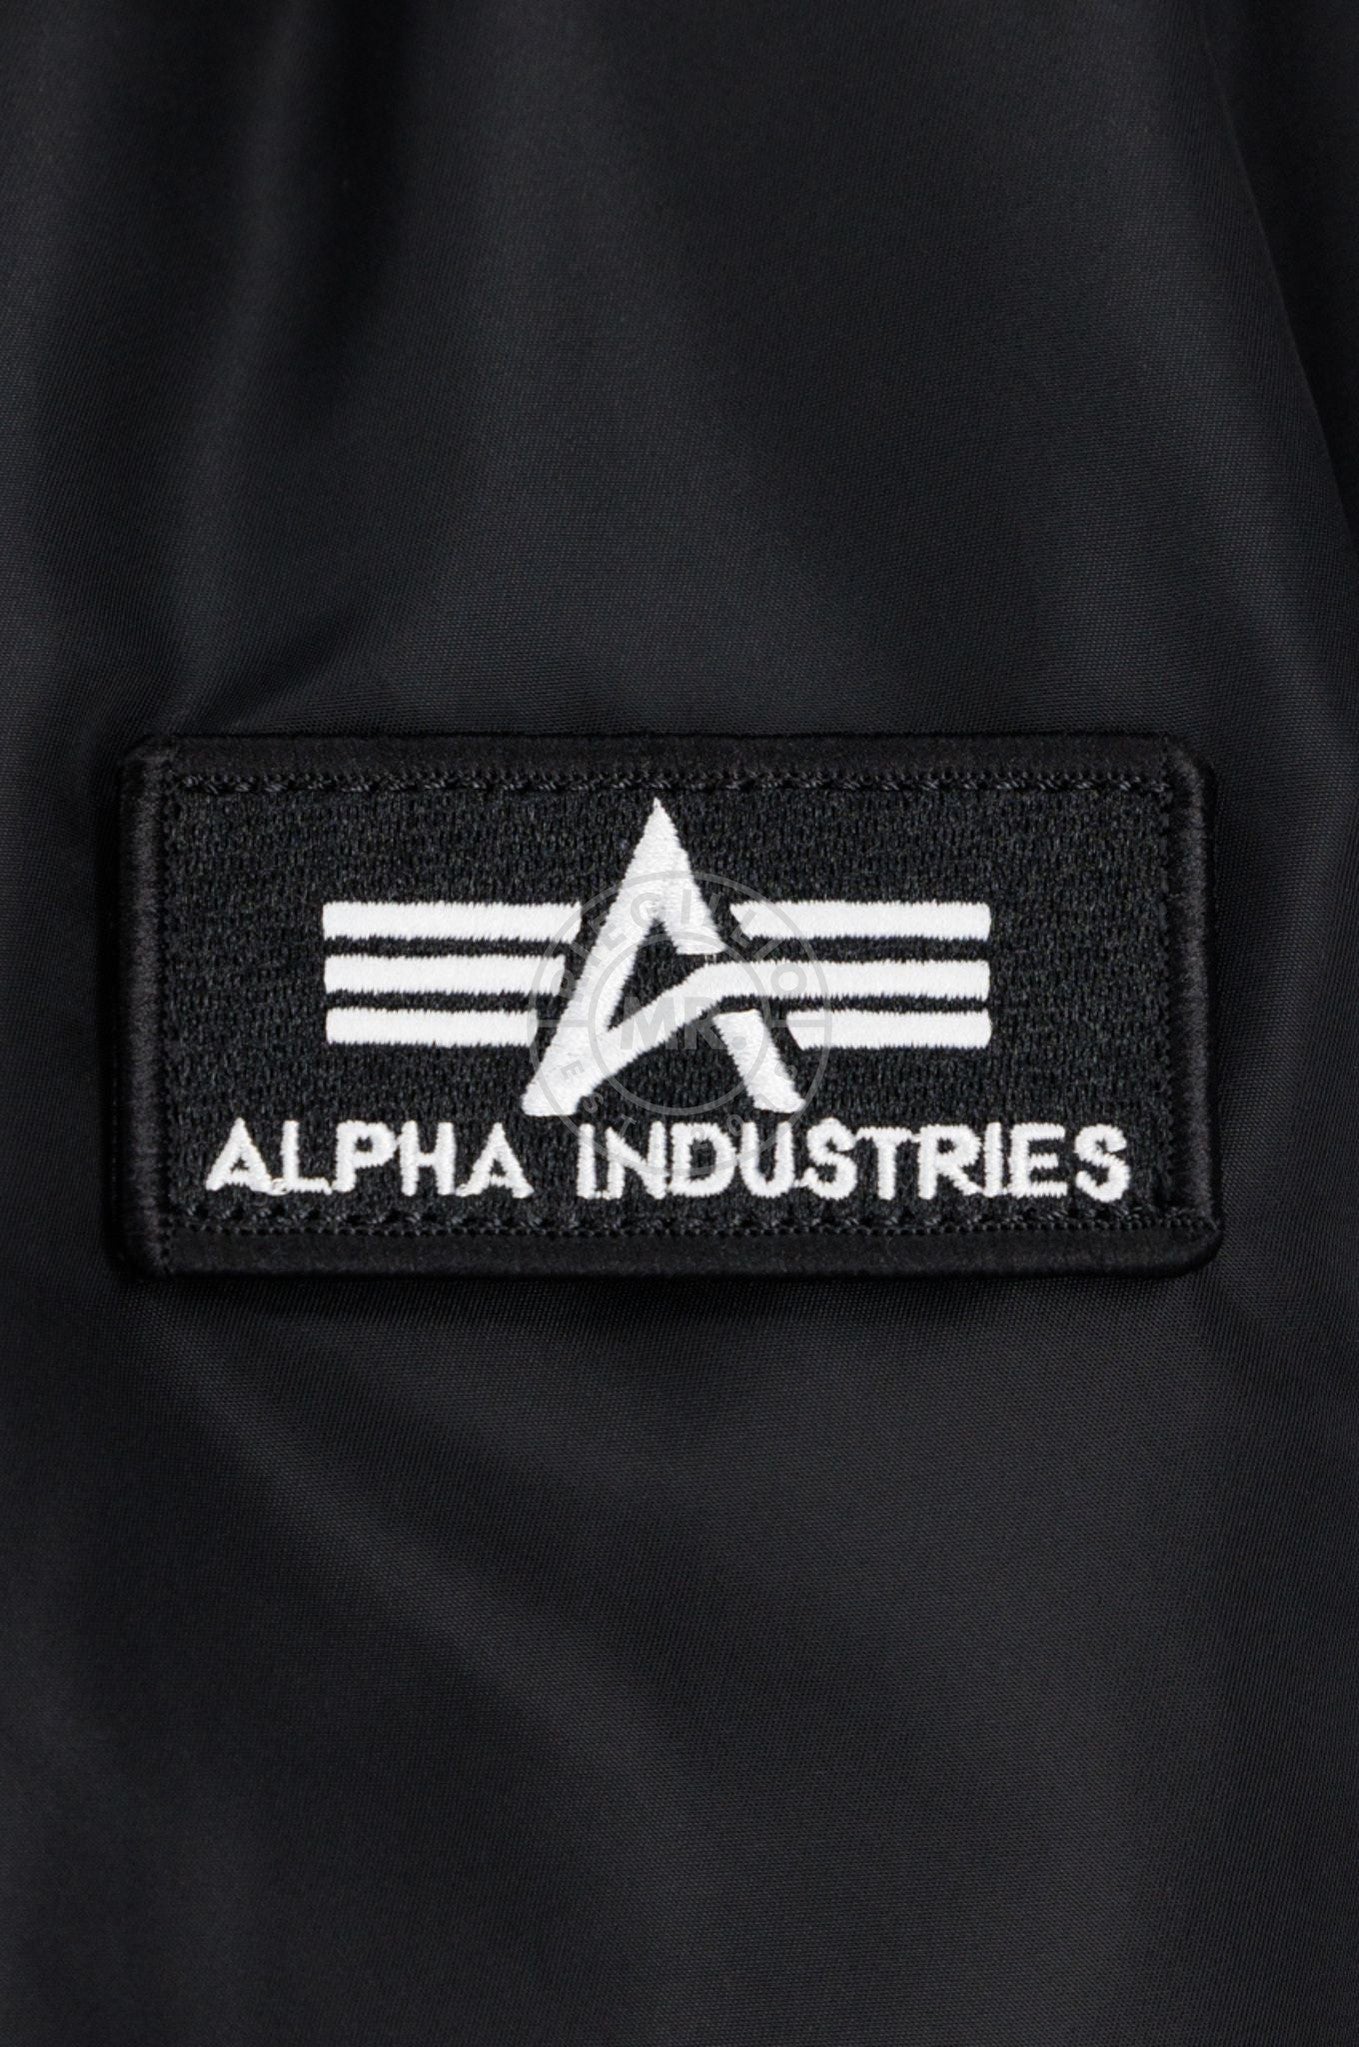 Alpha Industries MA-1 ZH D-Tec SE Jacket - Black / White at MR. Riegillio